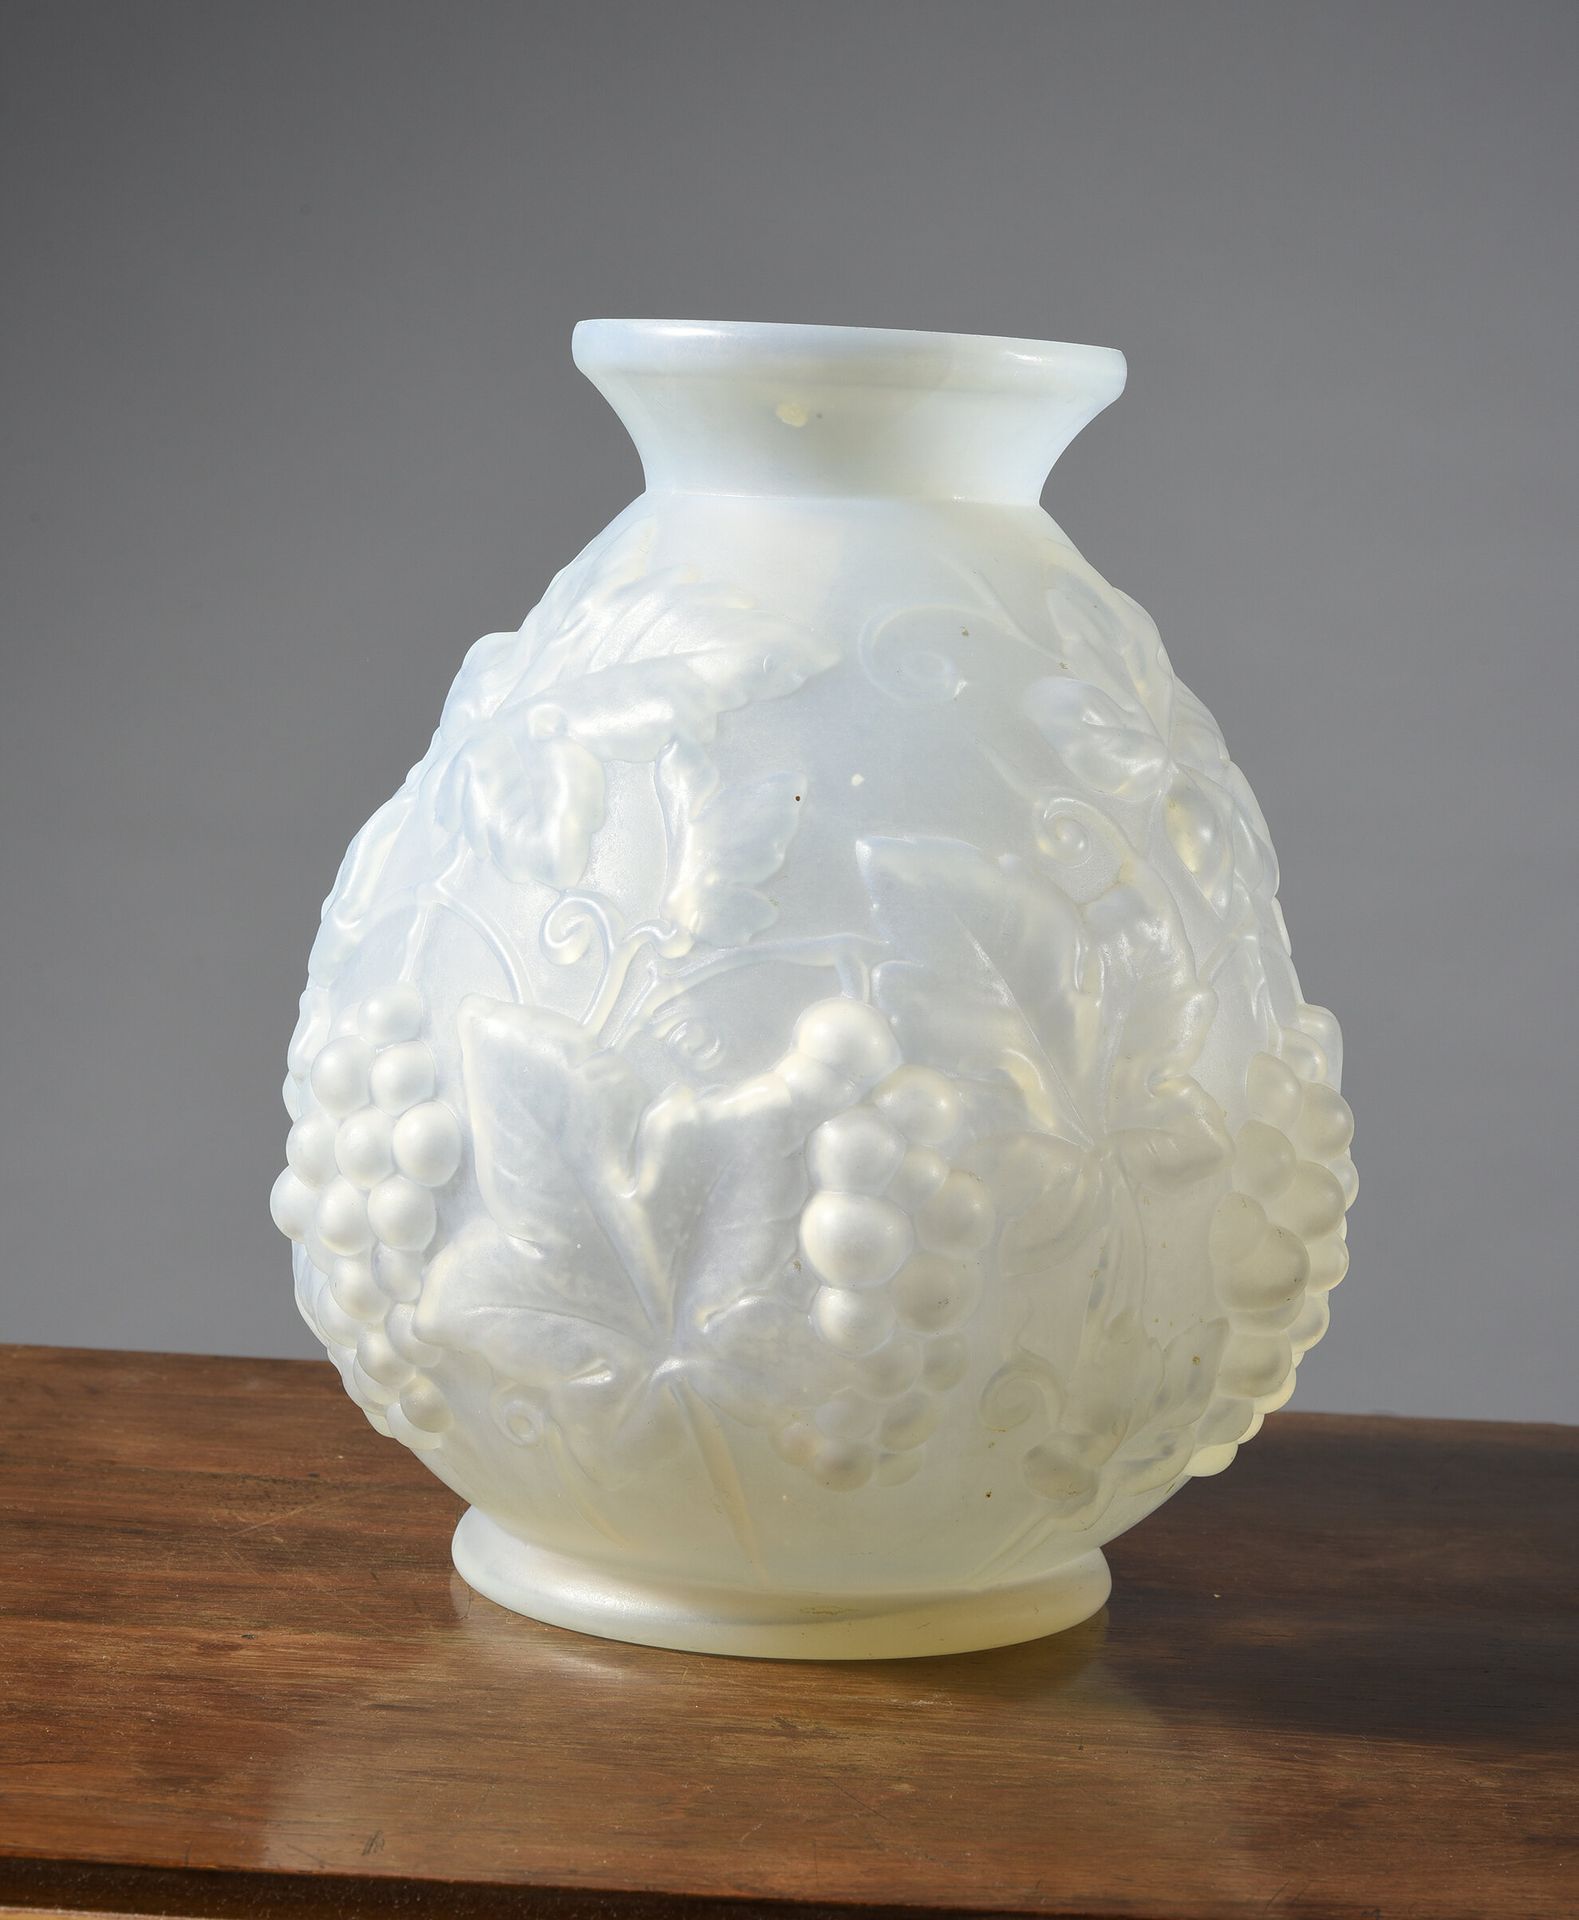 Null 乳白色模壓玻璃圓形花瓶，飾以一串葡萄。(颈部有小缺口)
高：25厘米。